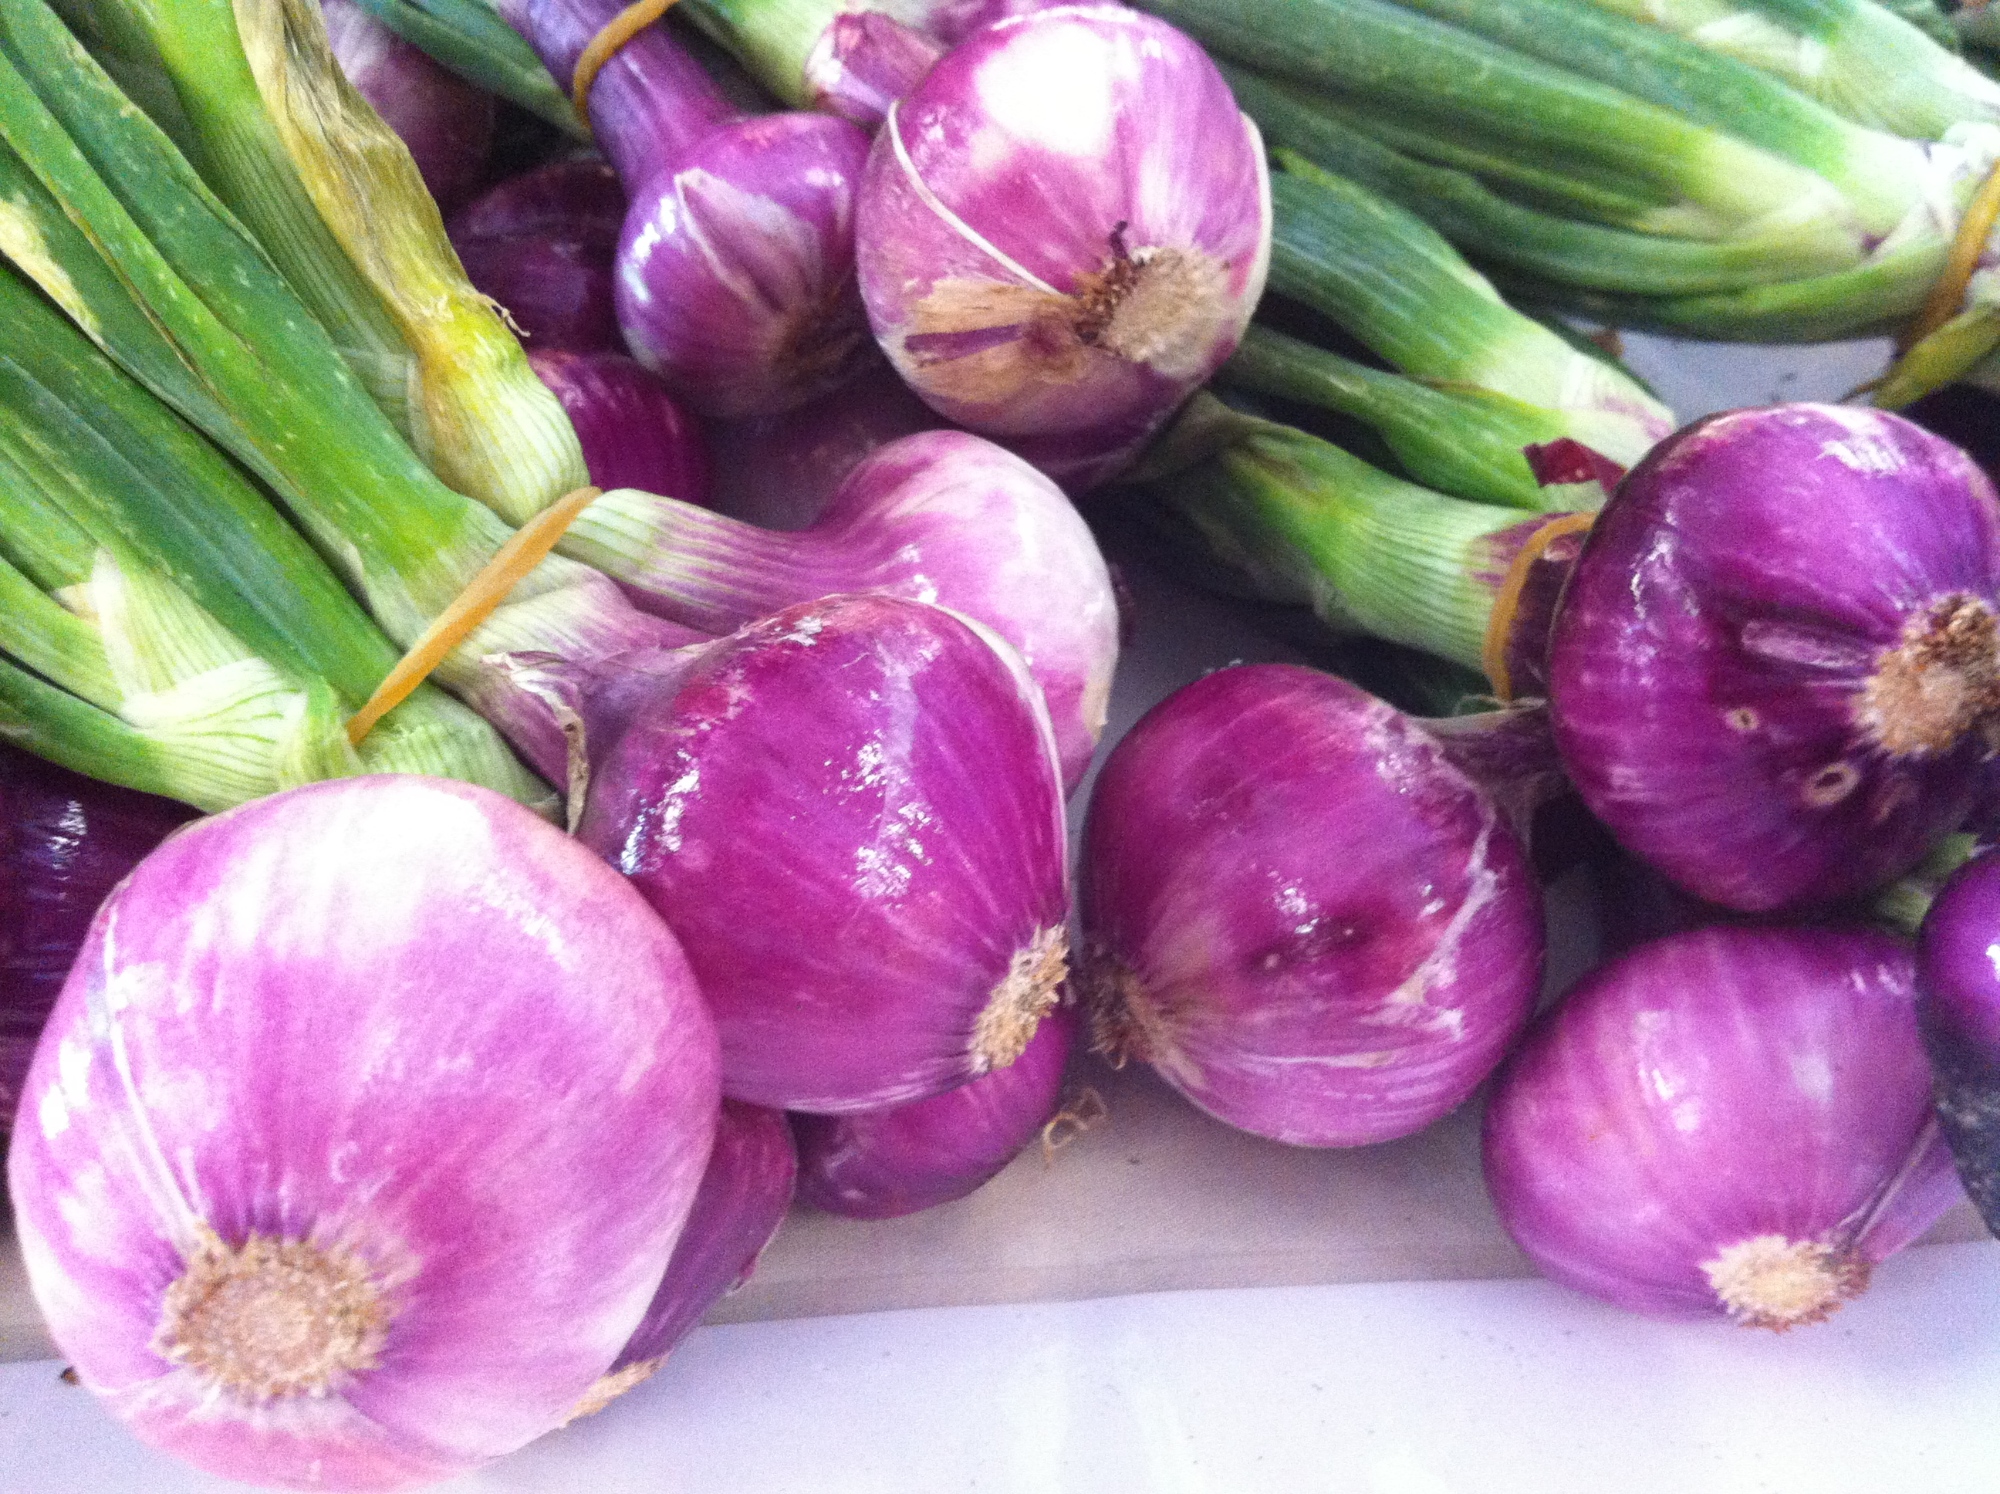 The sweet onion of Certaldo